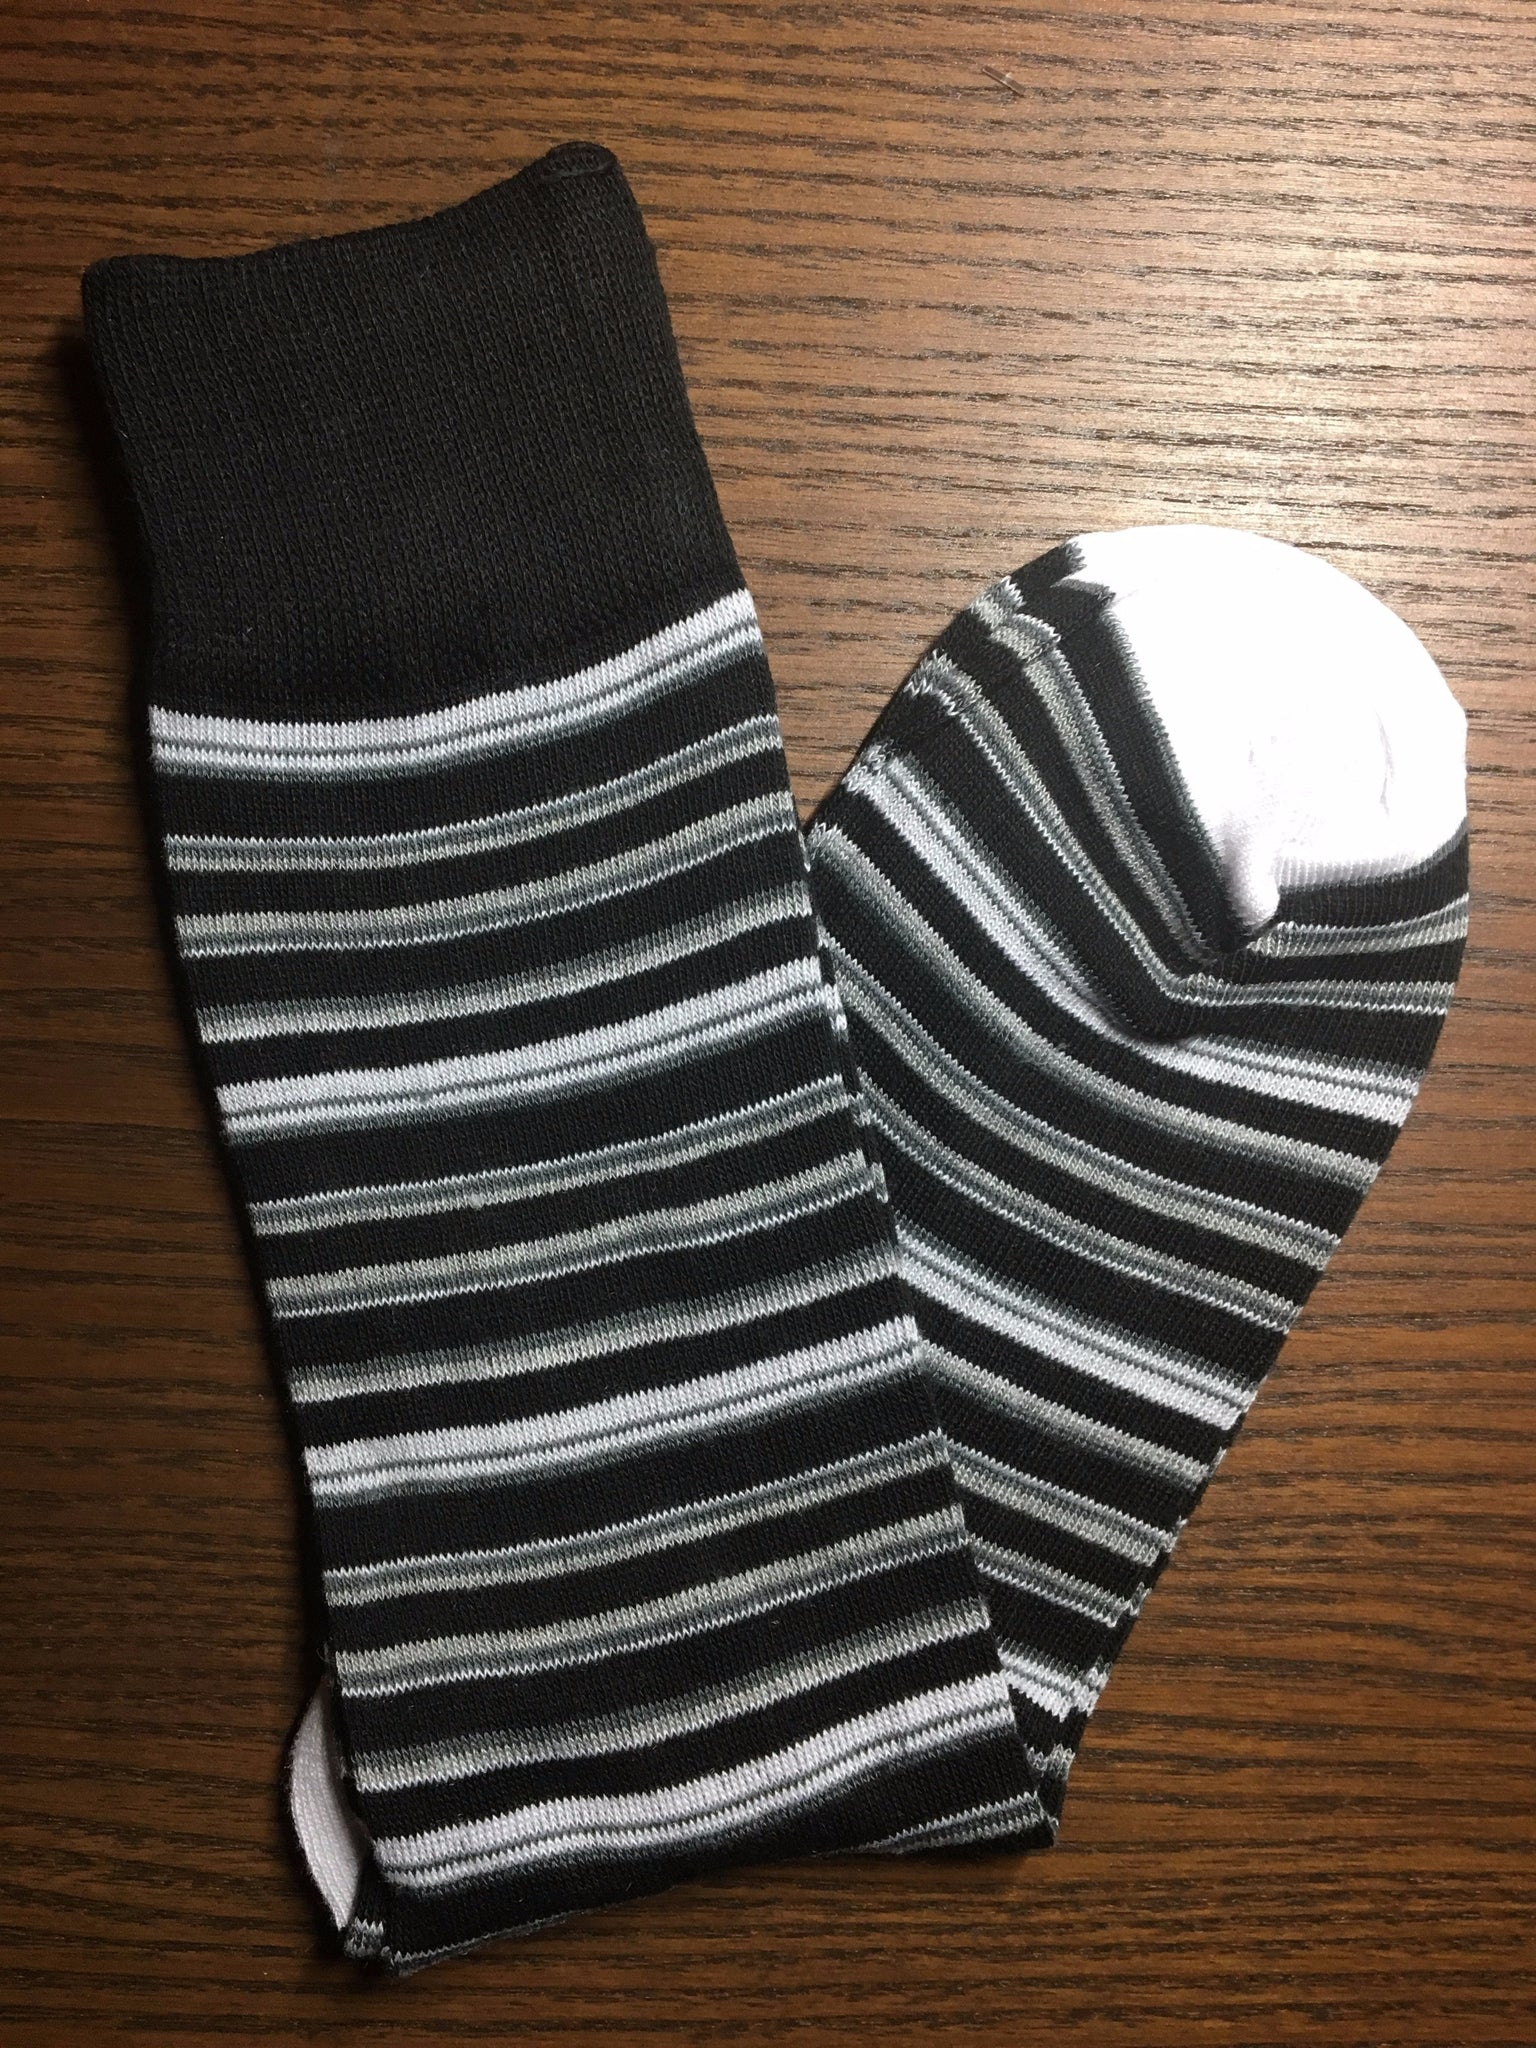 Medias a rayas blanco y negro - Socksn'Ties